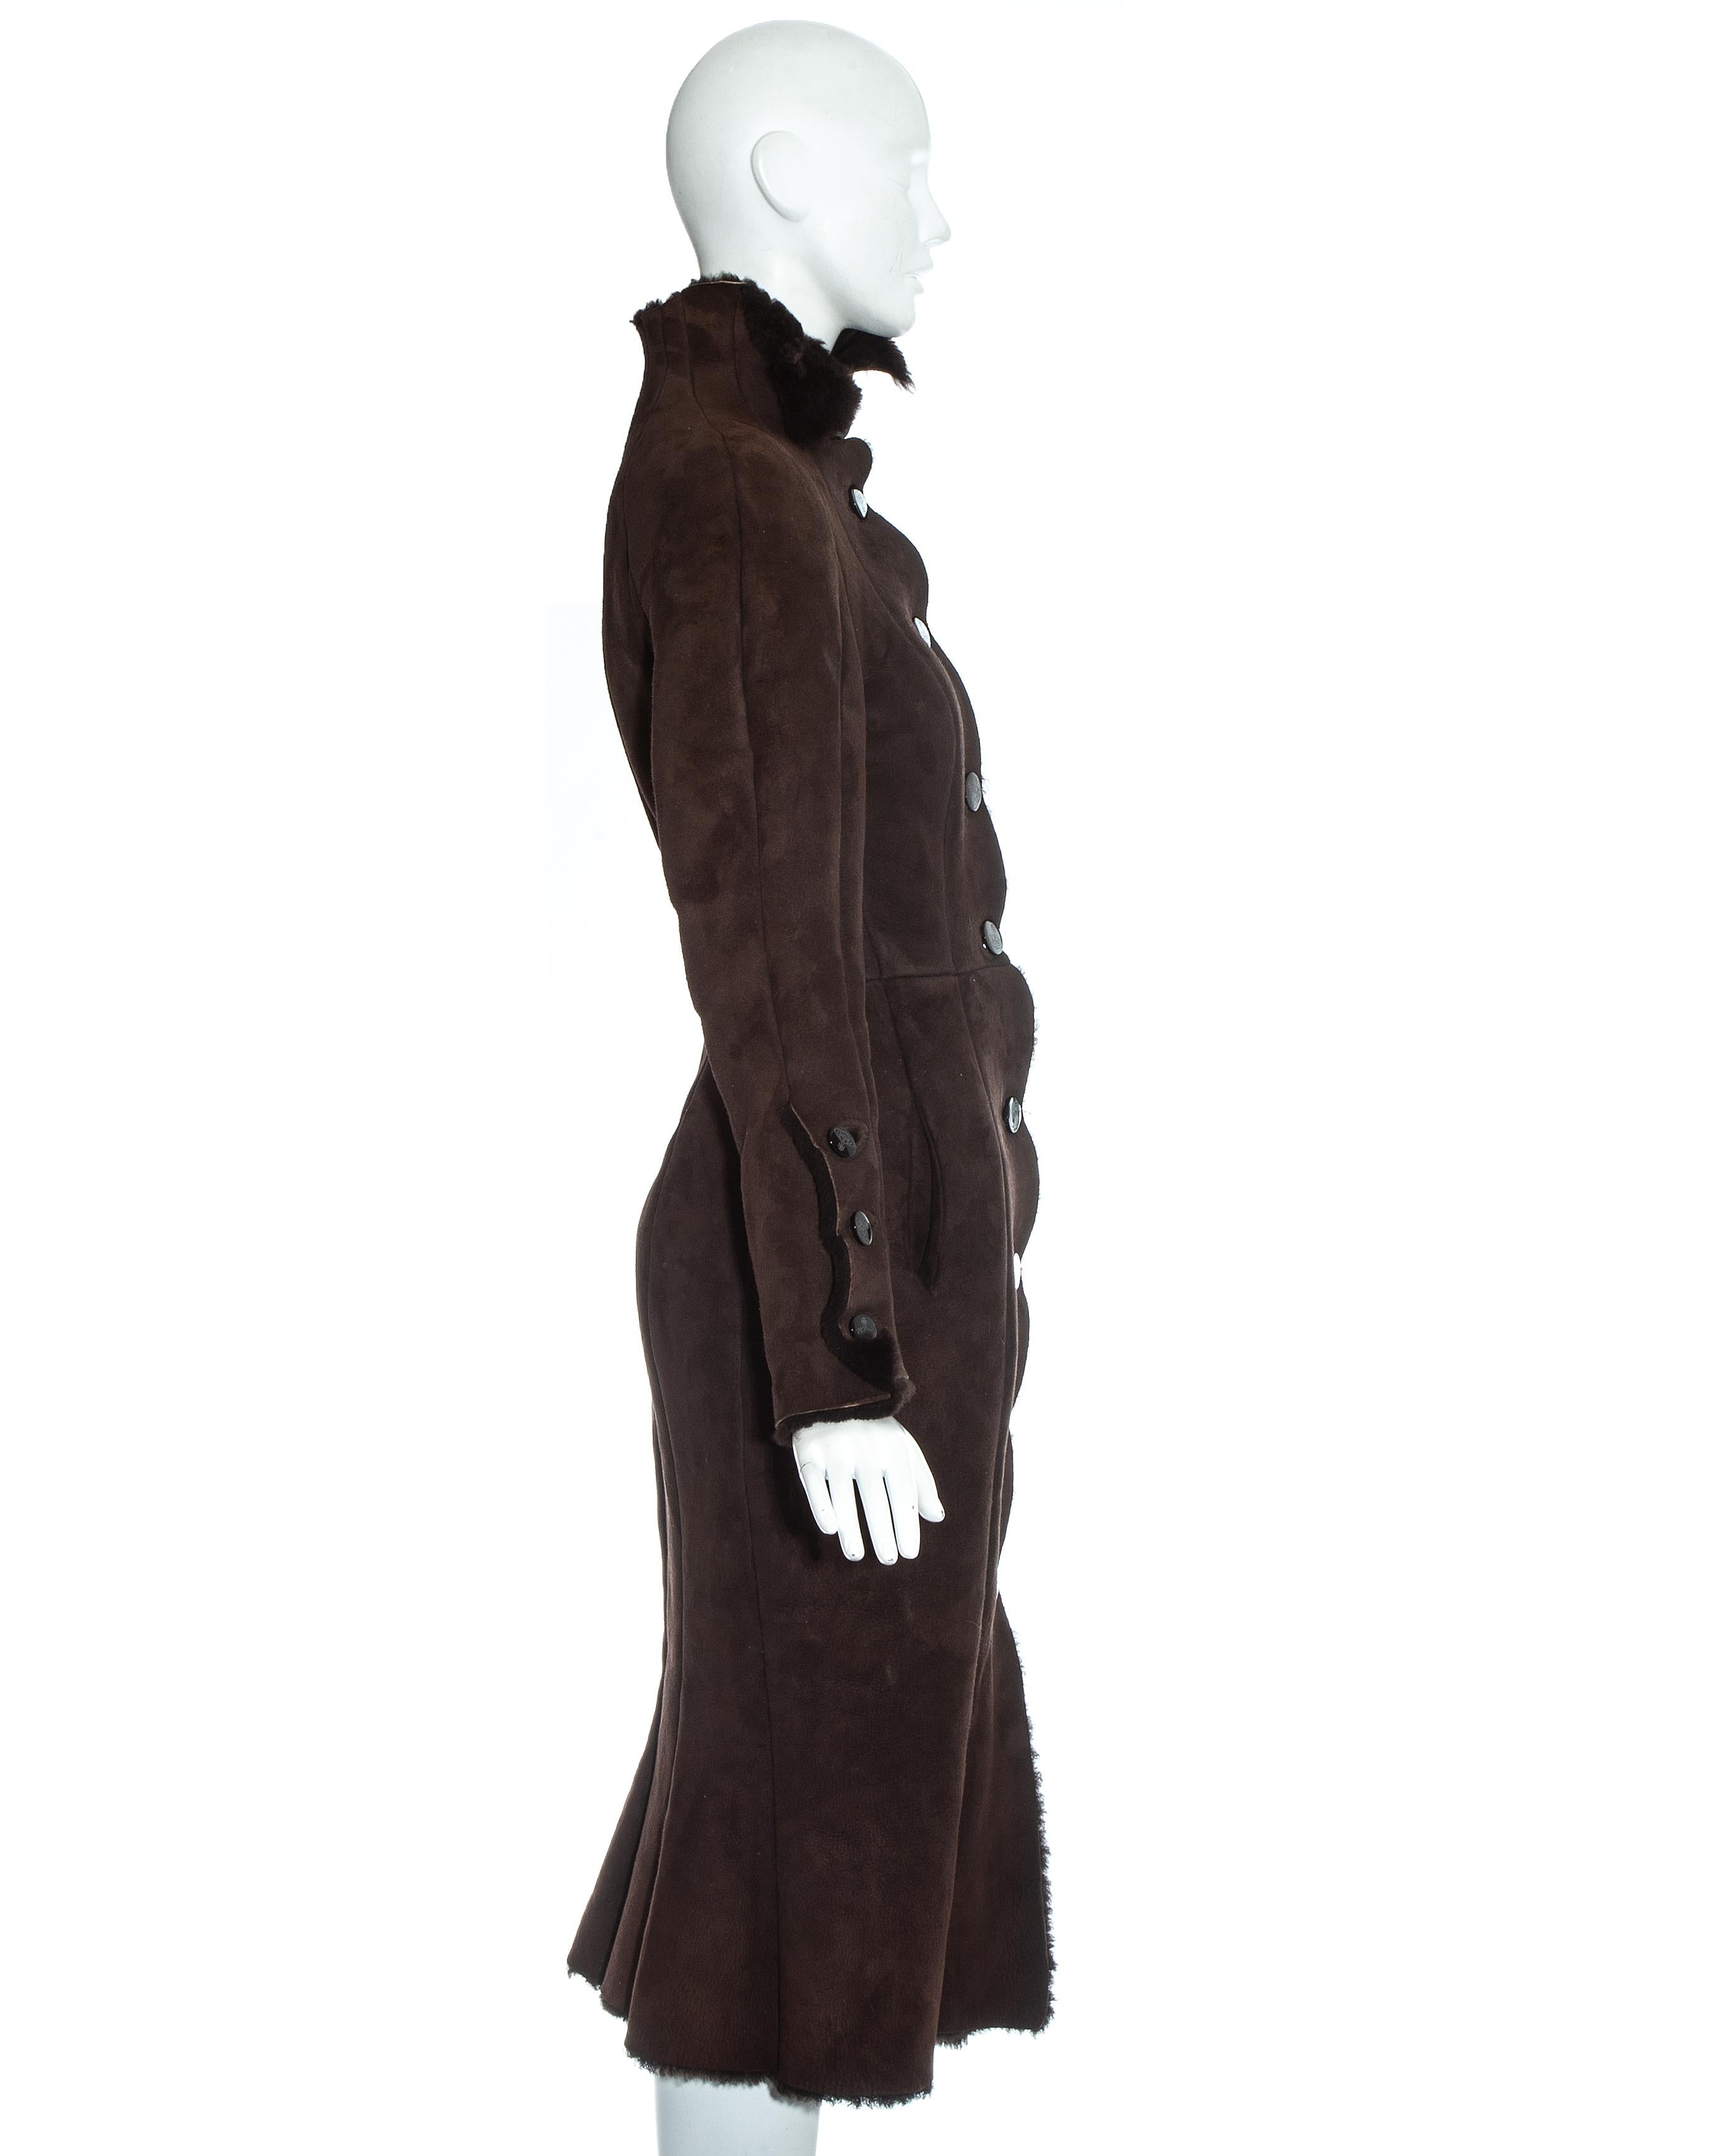 Black Vivienne Westwood brown shearling coat dress, fw 1992 For Sale